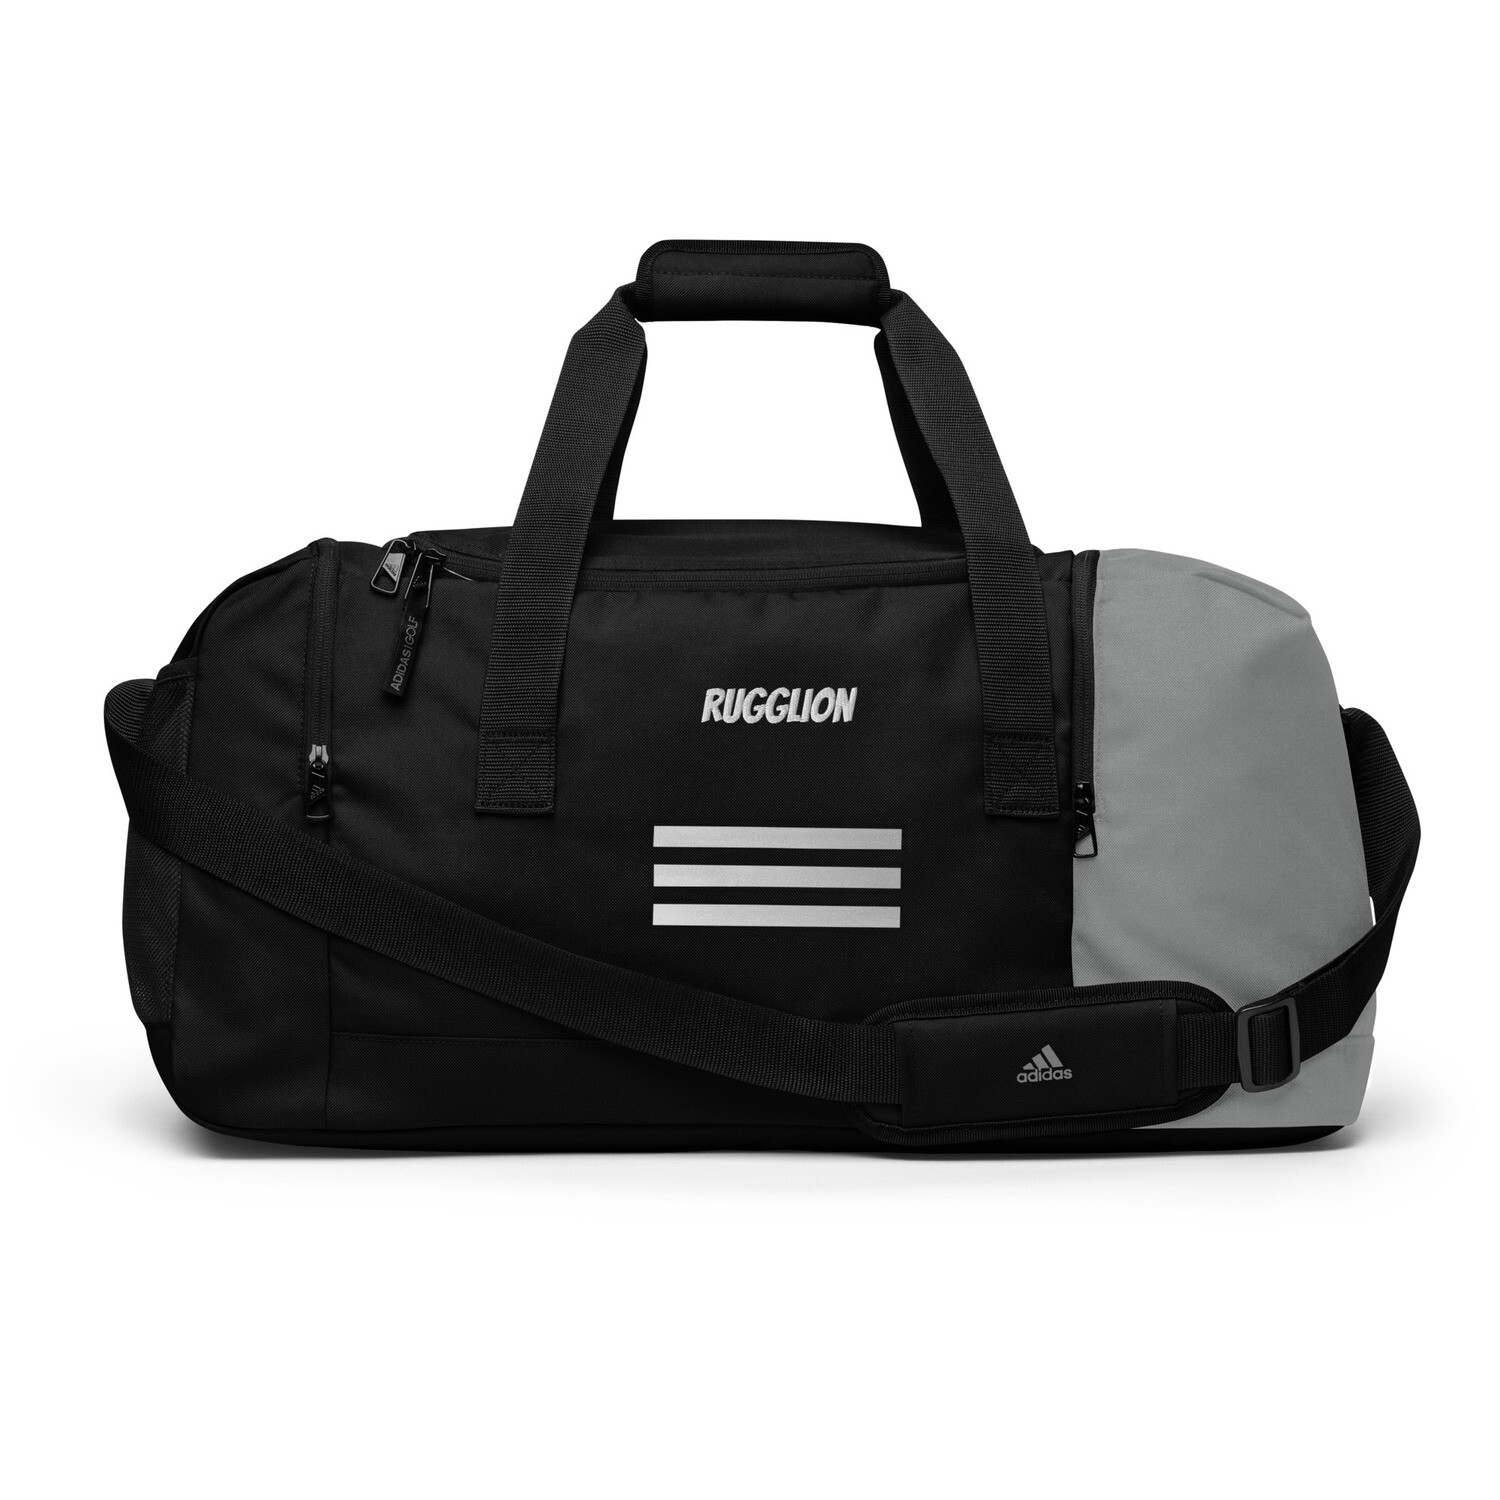 Basic Rugglion Duffle Bag - Adidas